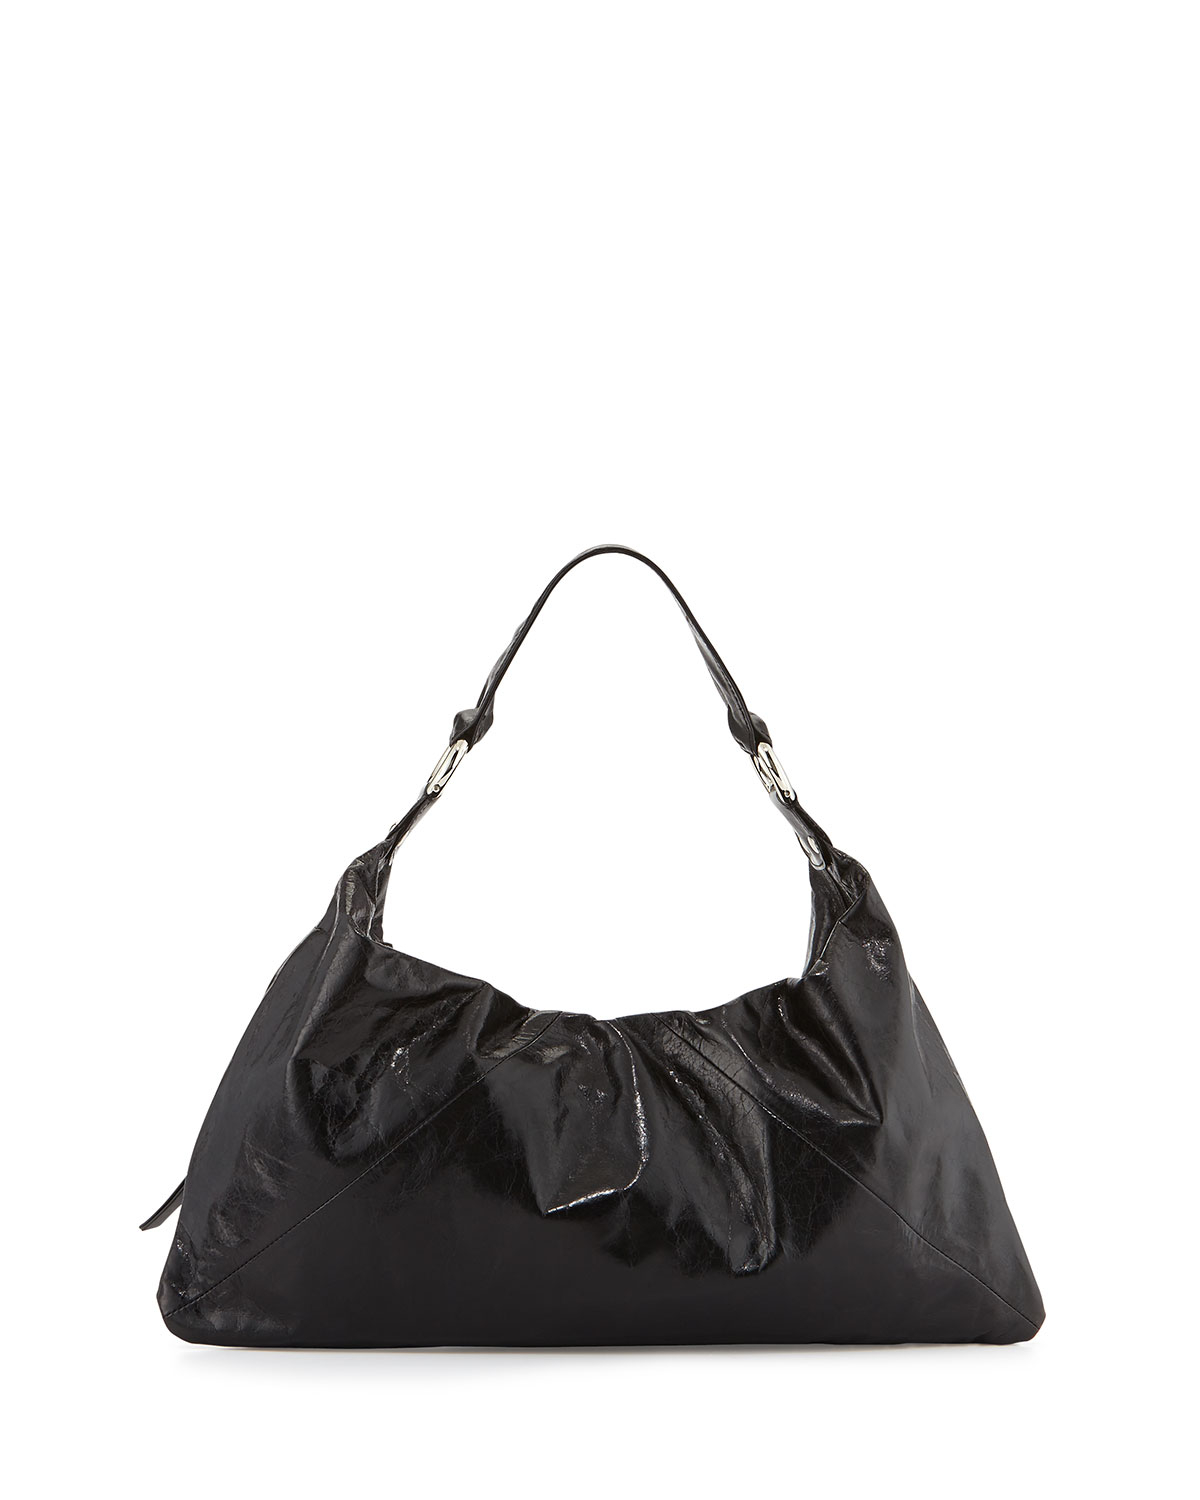 Lyst - Hobo Paulette Glossy Leather Shoulder Bag in Black